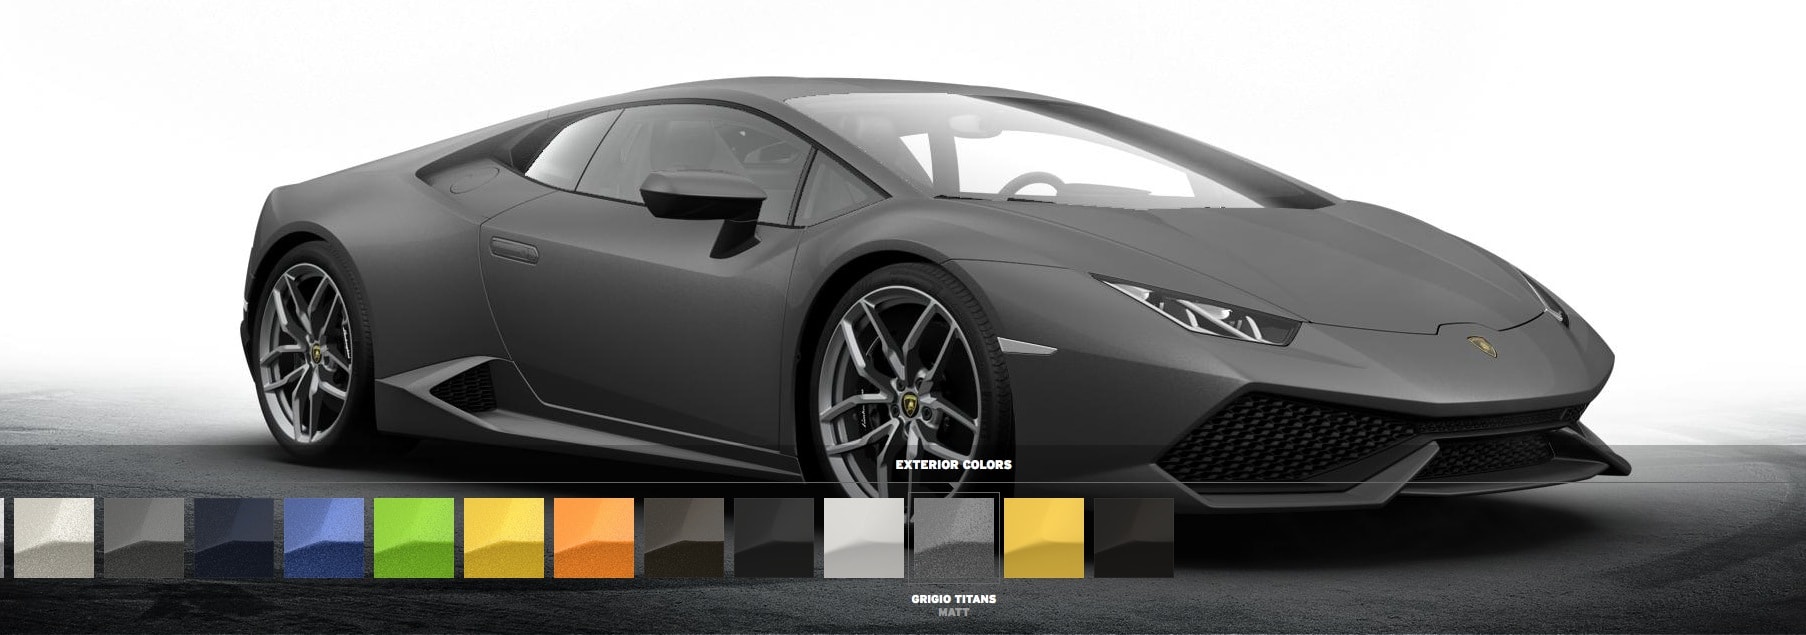 Lamborghini Huracan Configurator Brings Five Matt Colors ...